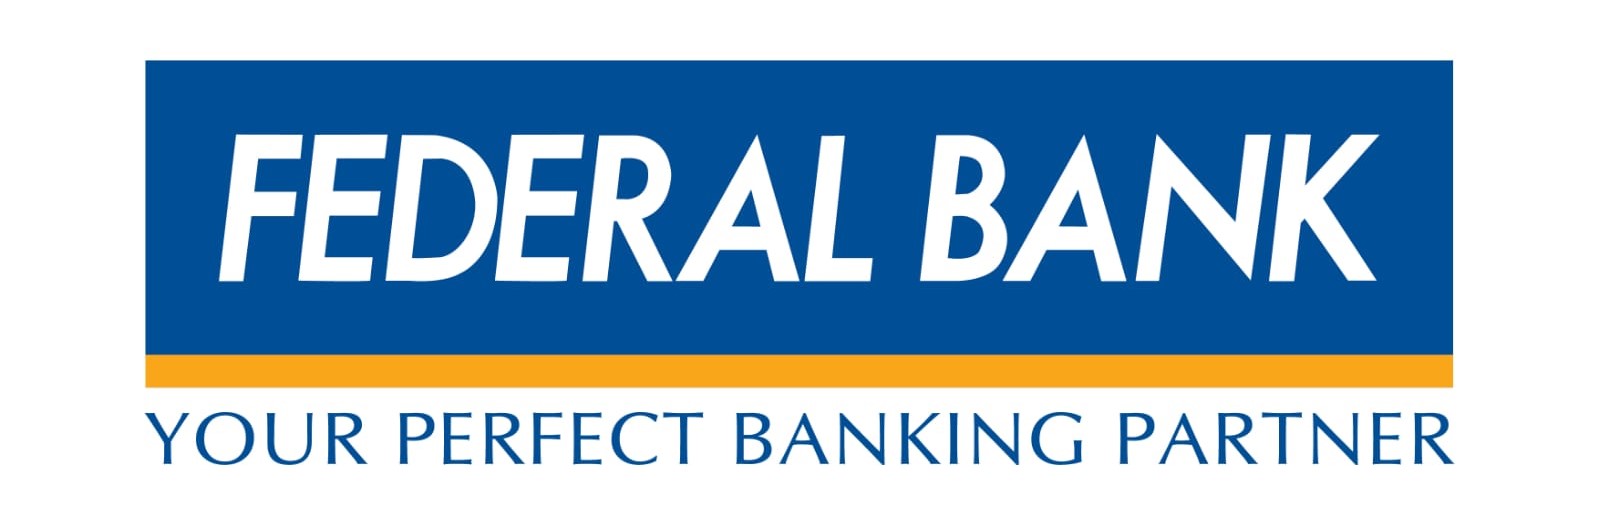 Federal Bank celebrates the Joy of Freedom